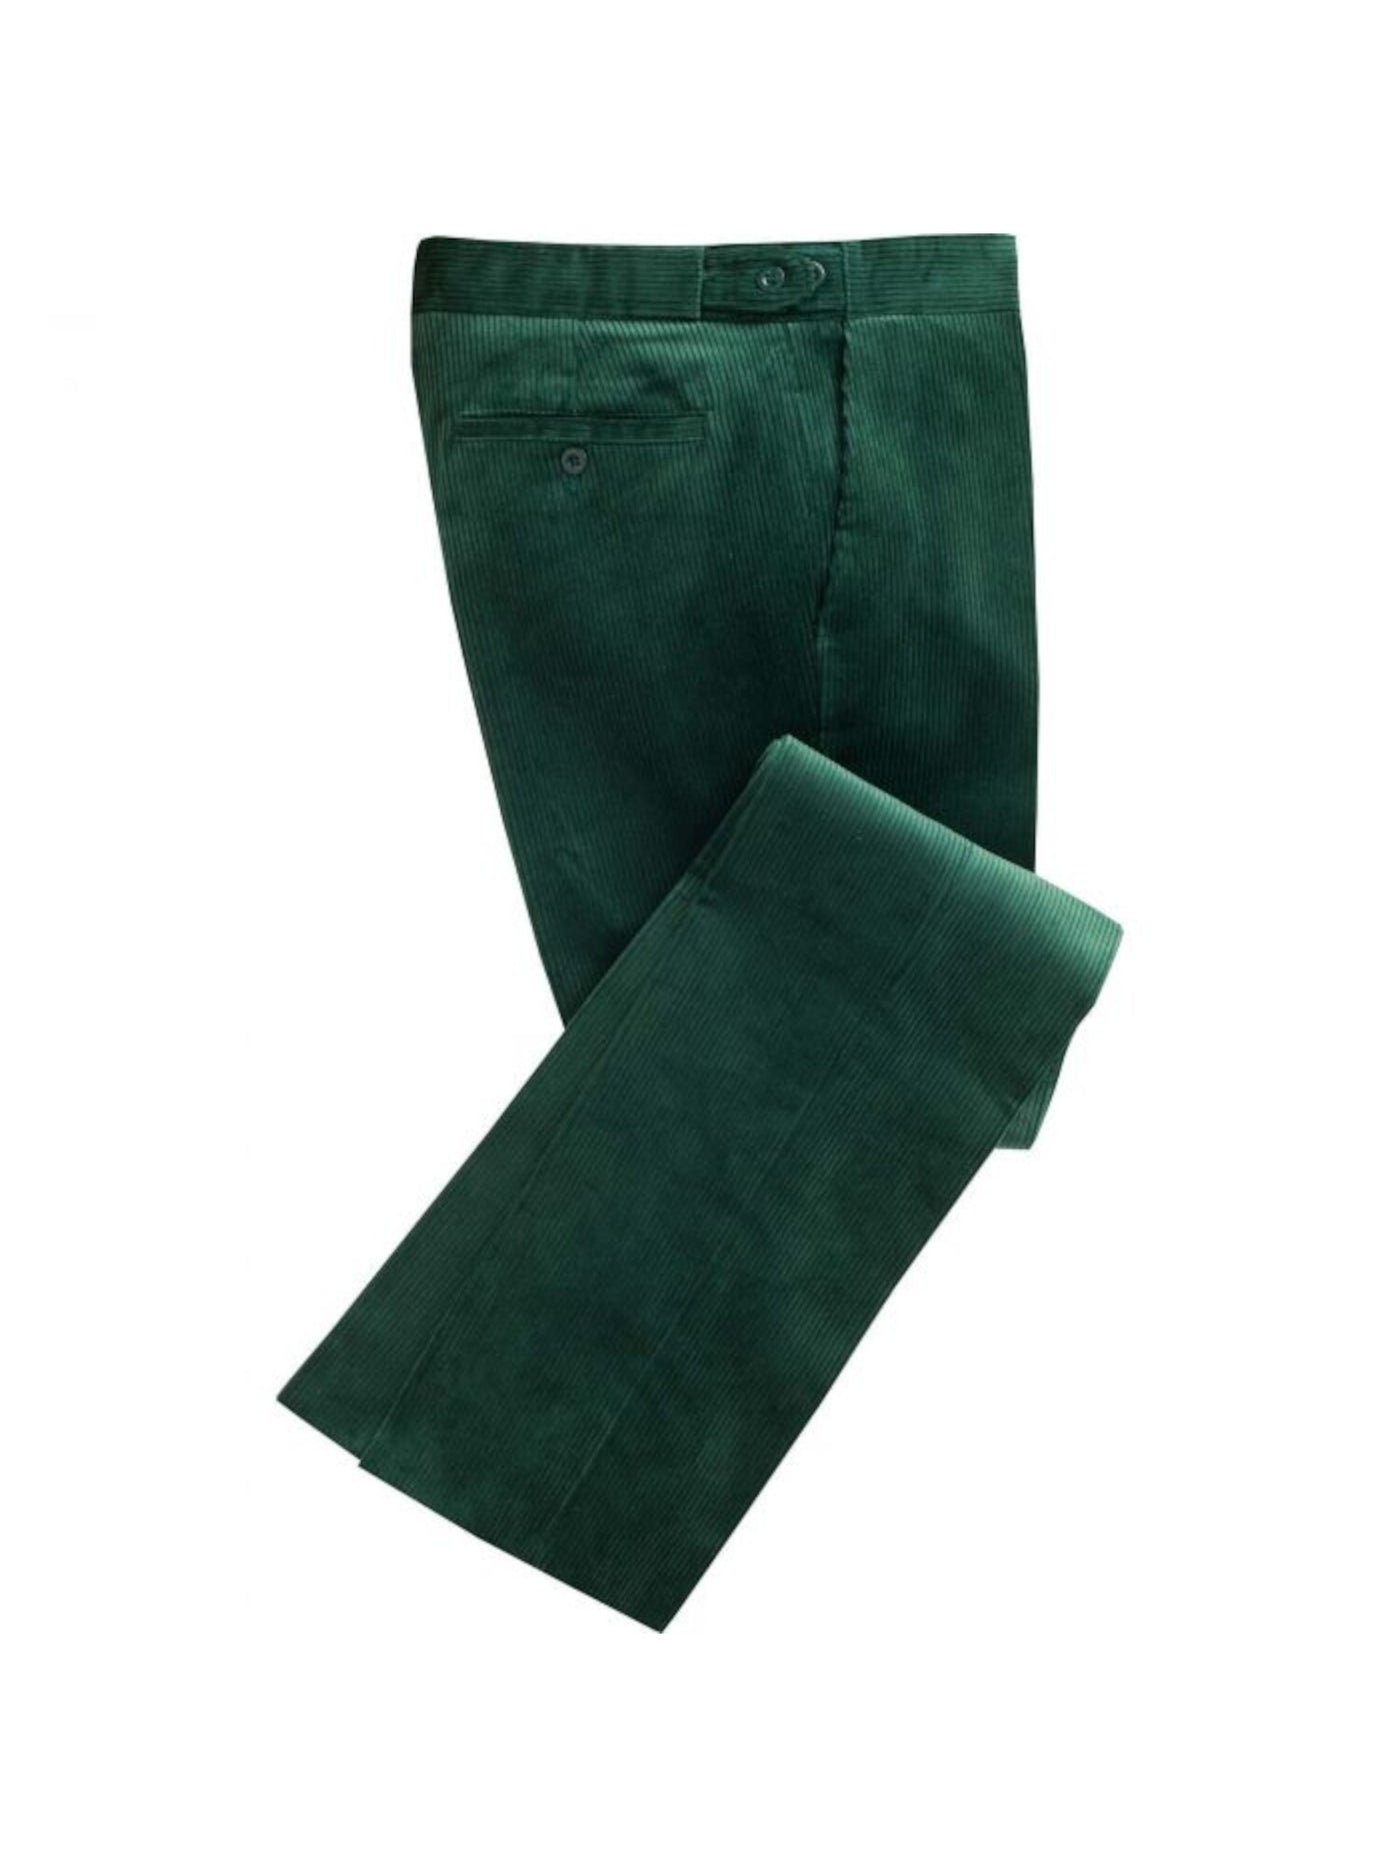 TORIN OPIFICIO Mens Green Flat Front Straight Leg Stretch Regular Fit Cotton Blend Pants 56